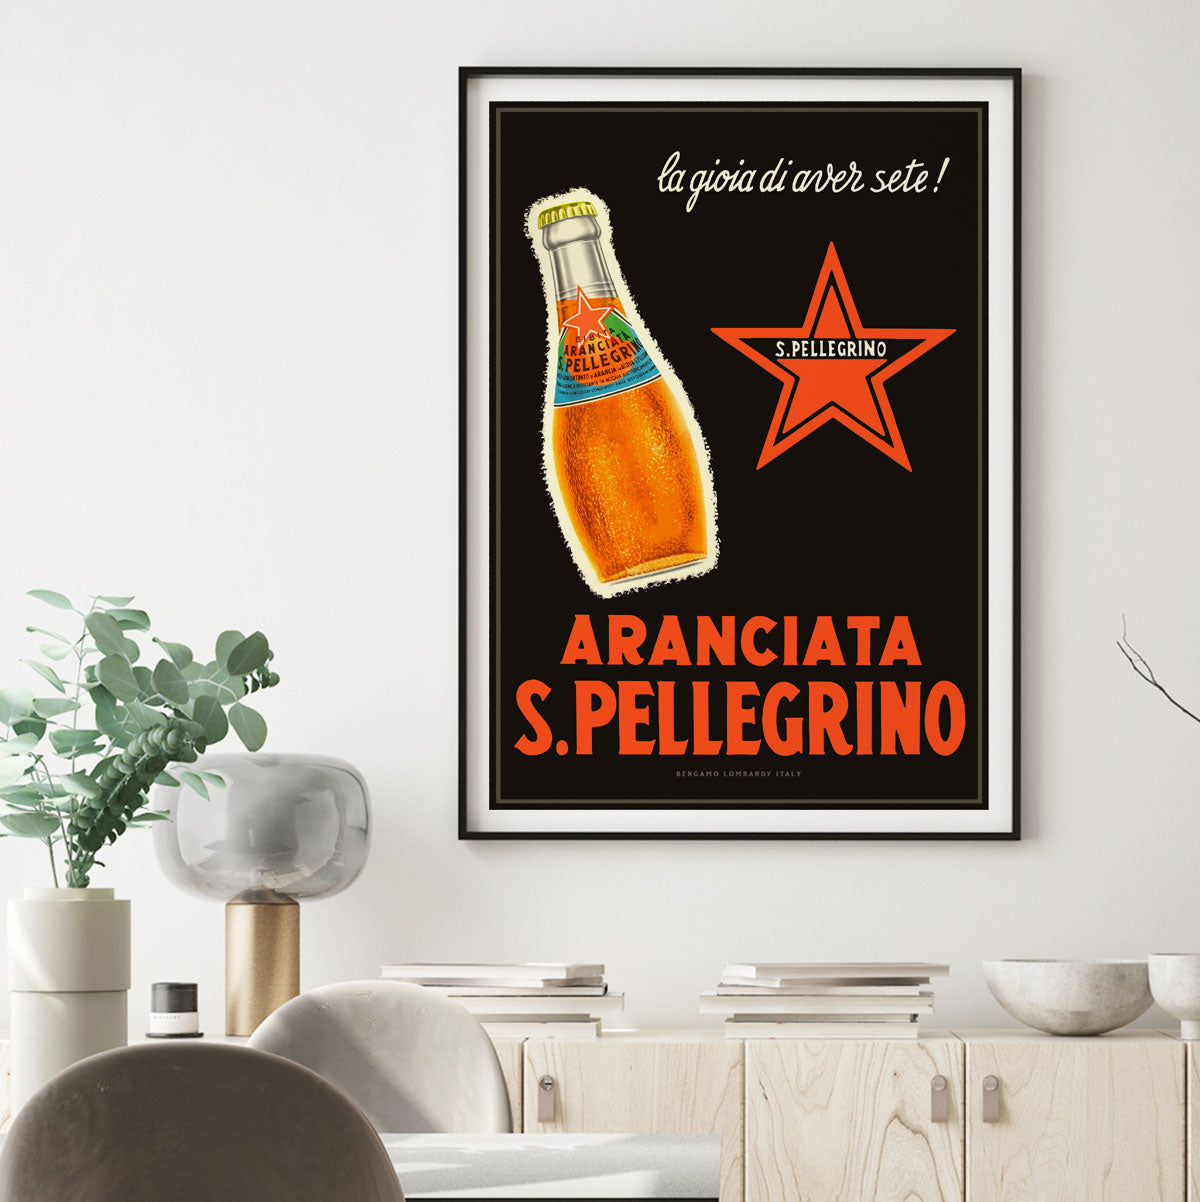 Aranciata S. Pellegrino Italy vintage retro poster print from Places We Luv 